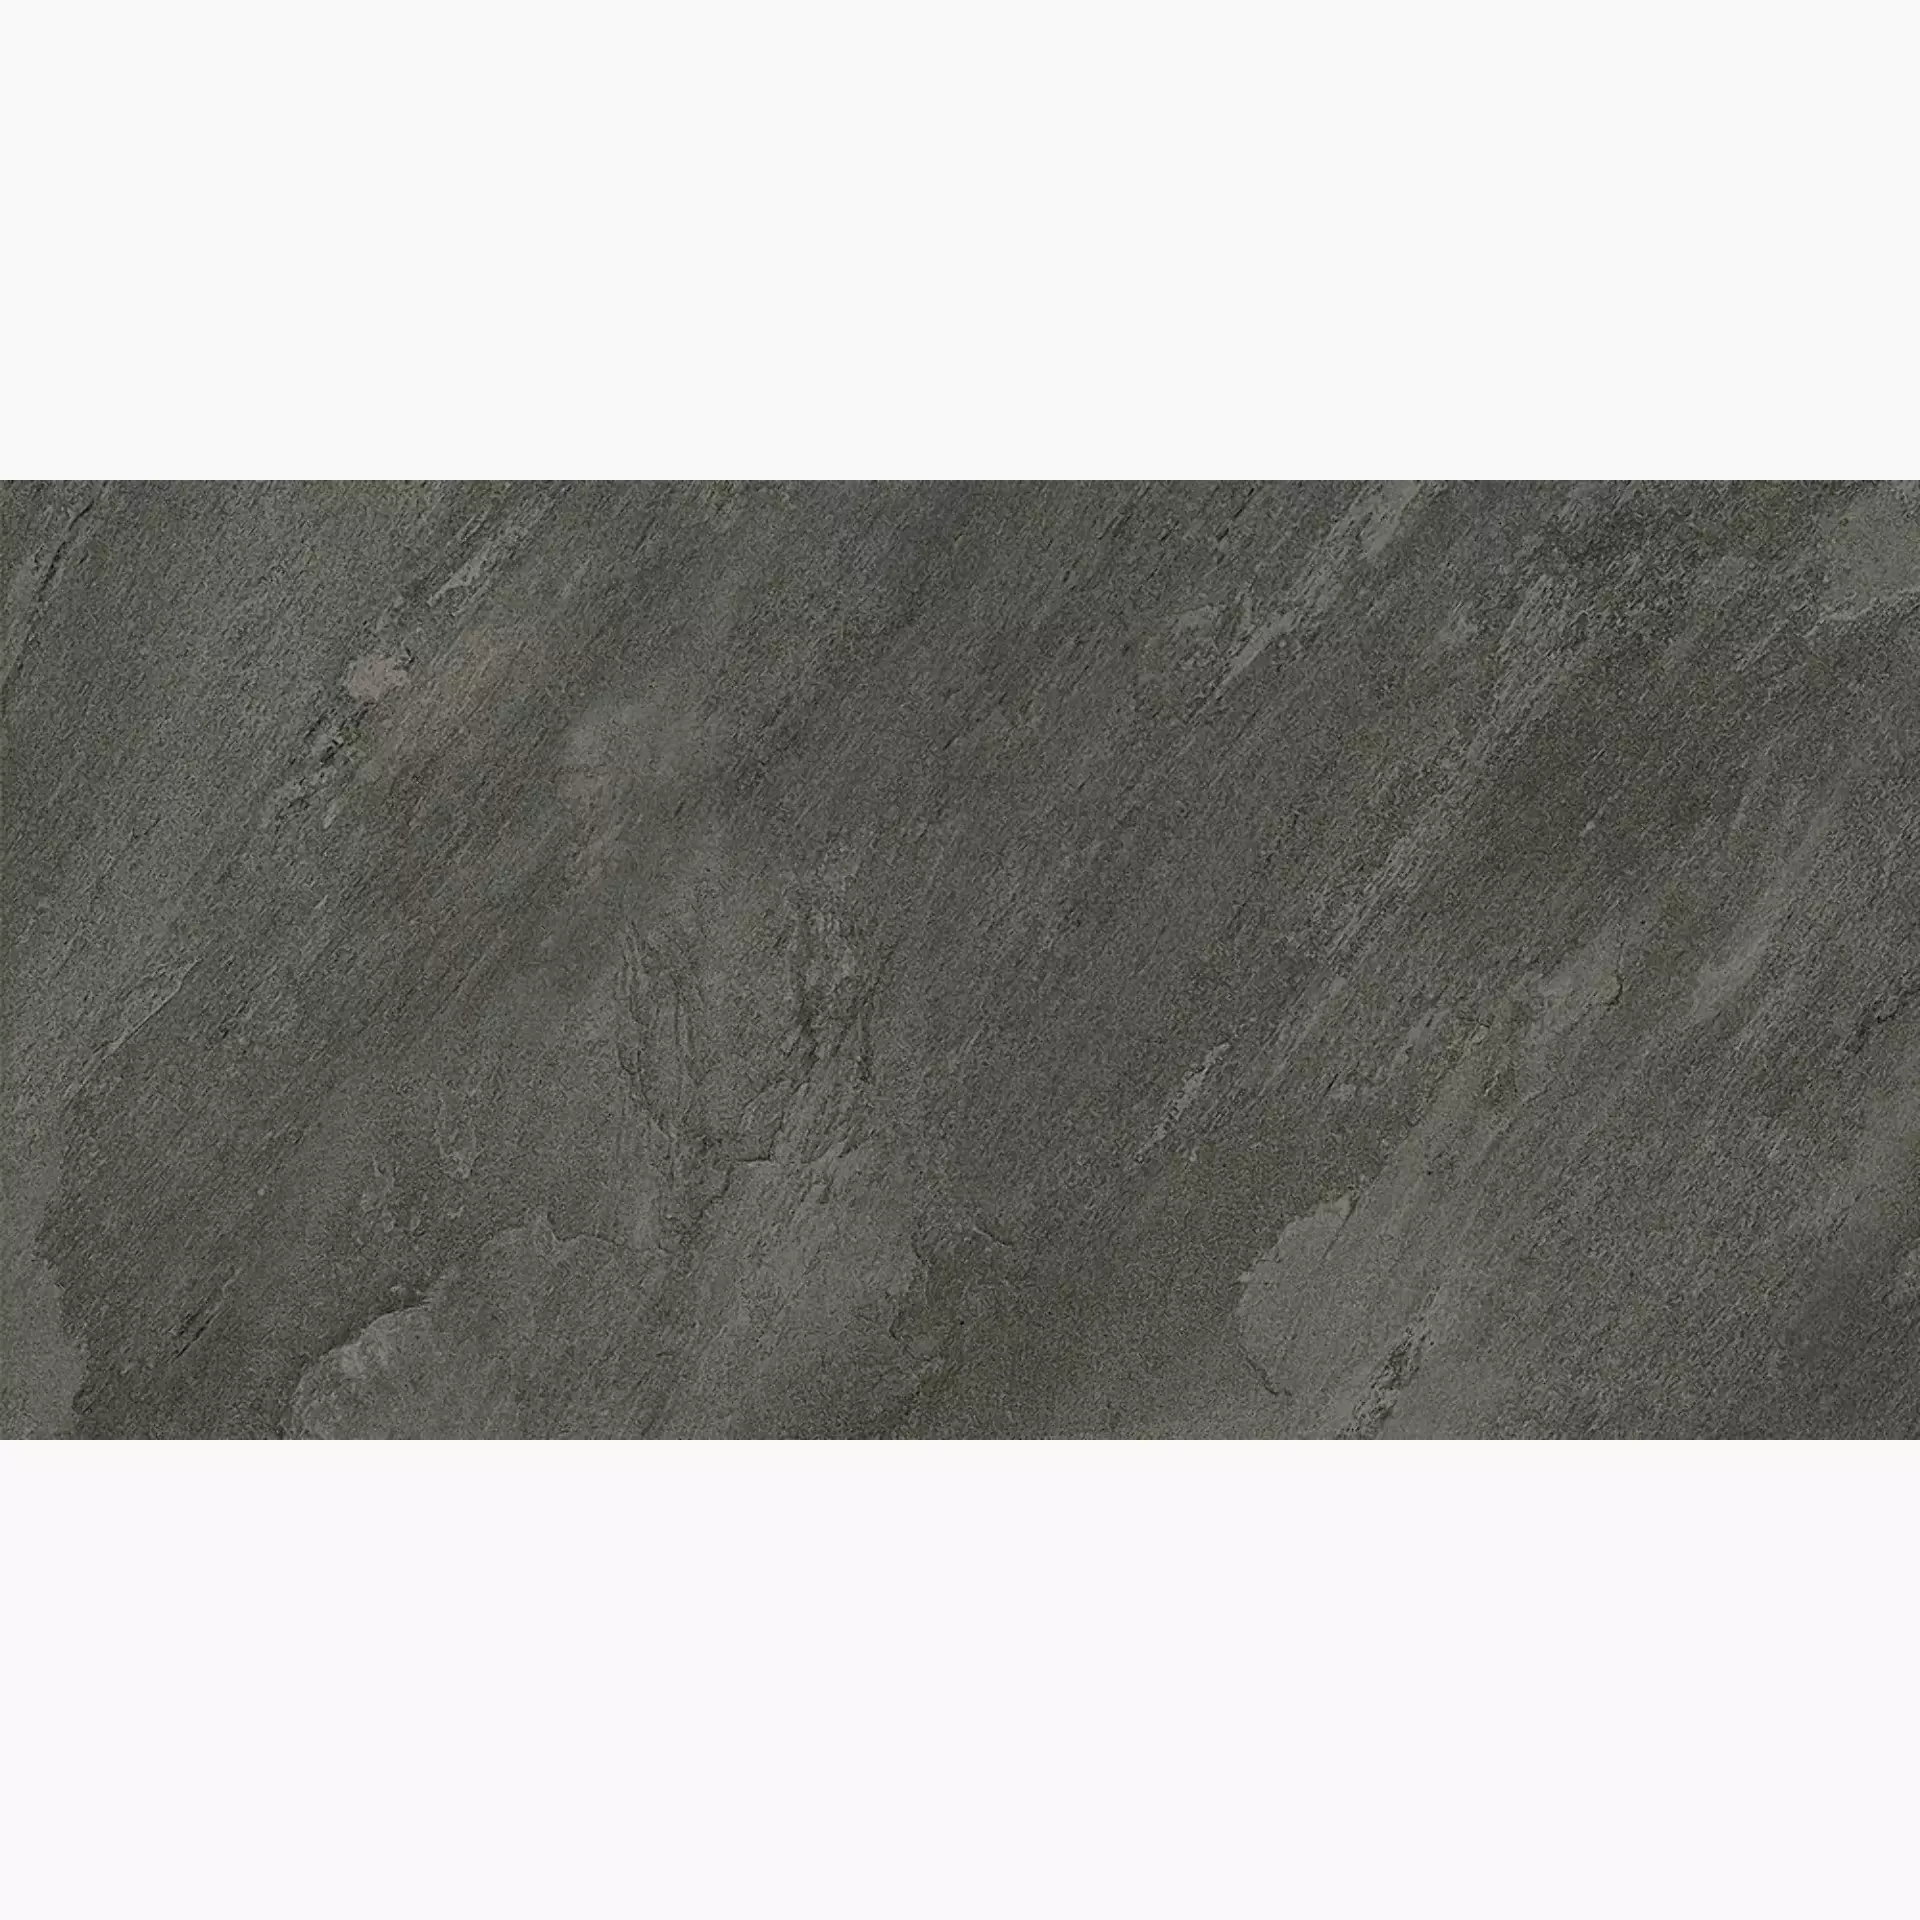 Century Stonerock Black Stone Two – Grip 0119810 50x100cm 20mm